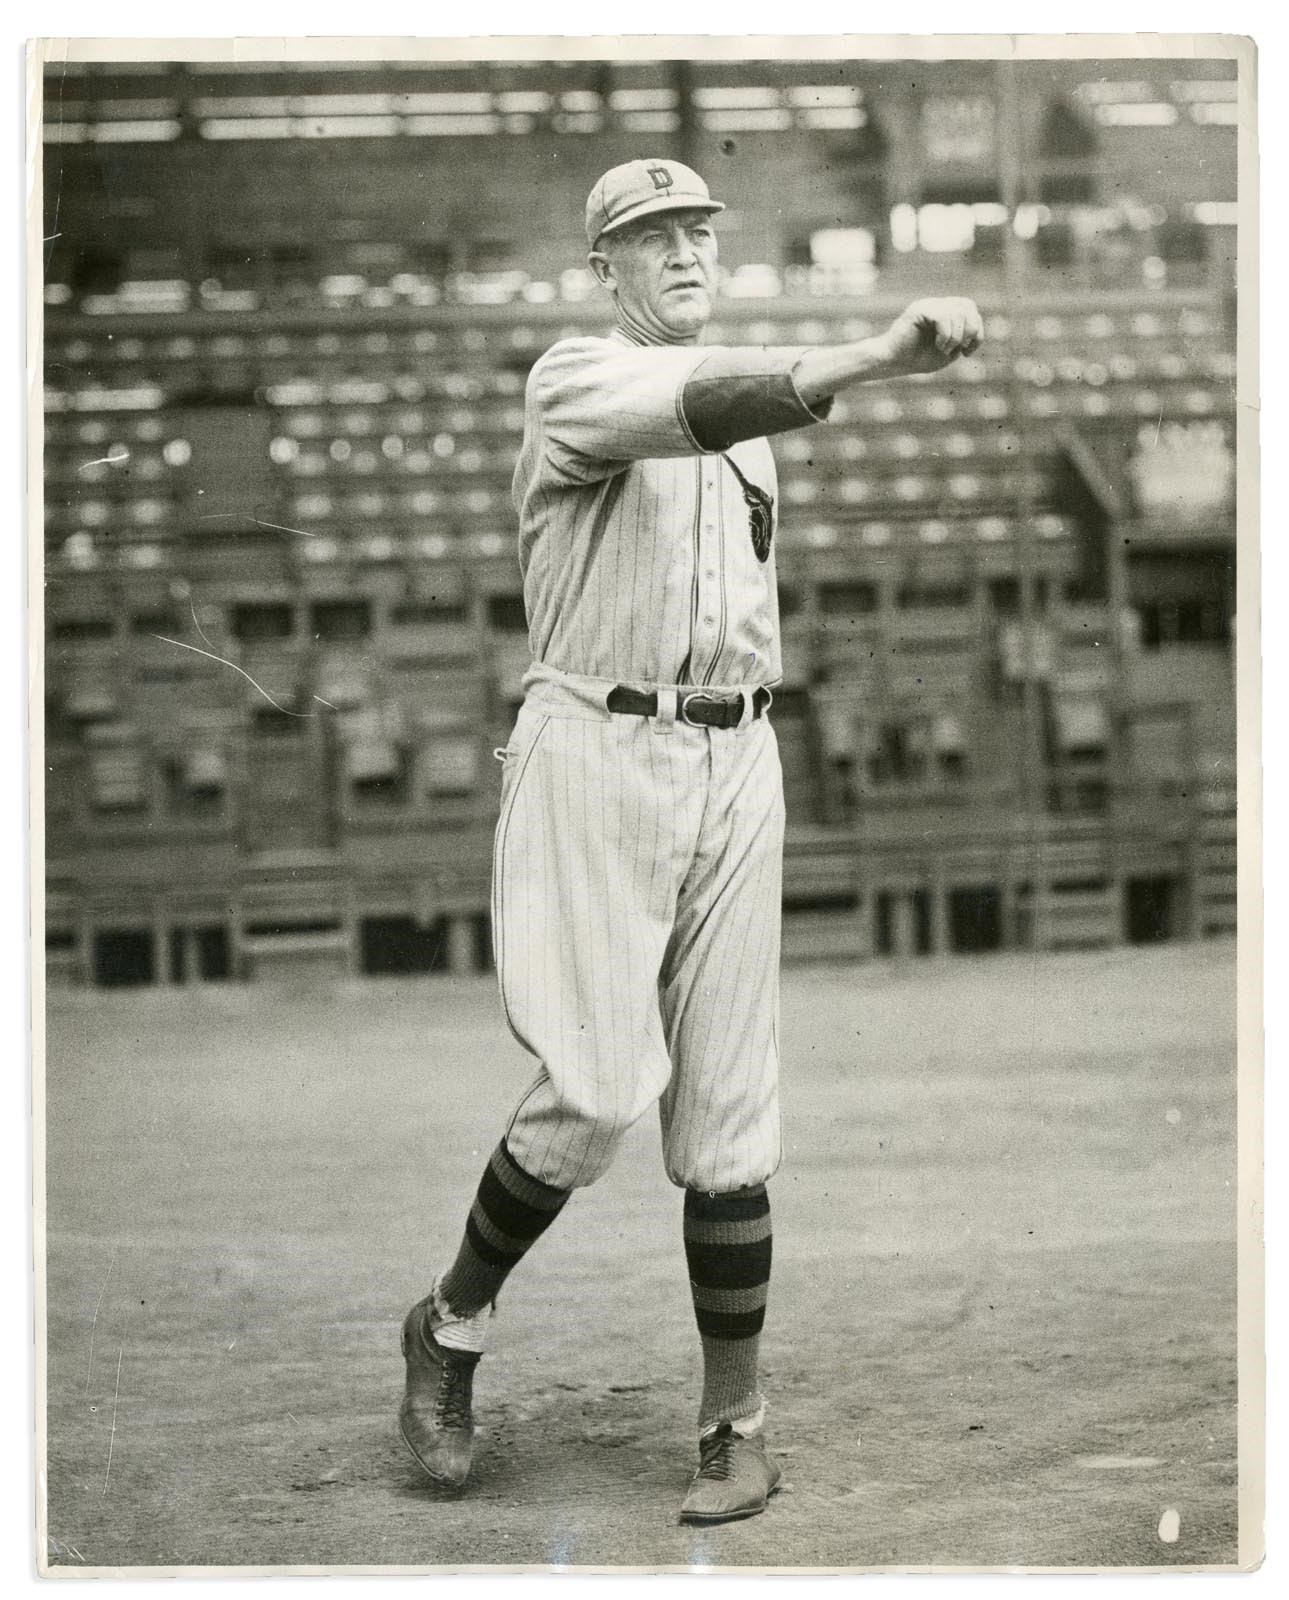 Last Baseball Photo of Grover Cleveland Alexander